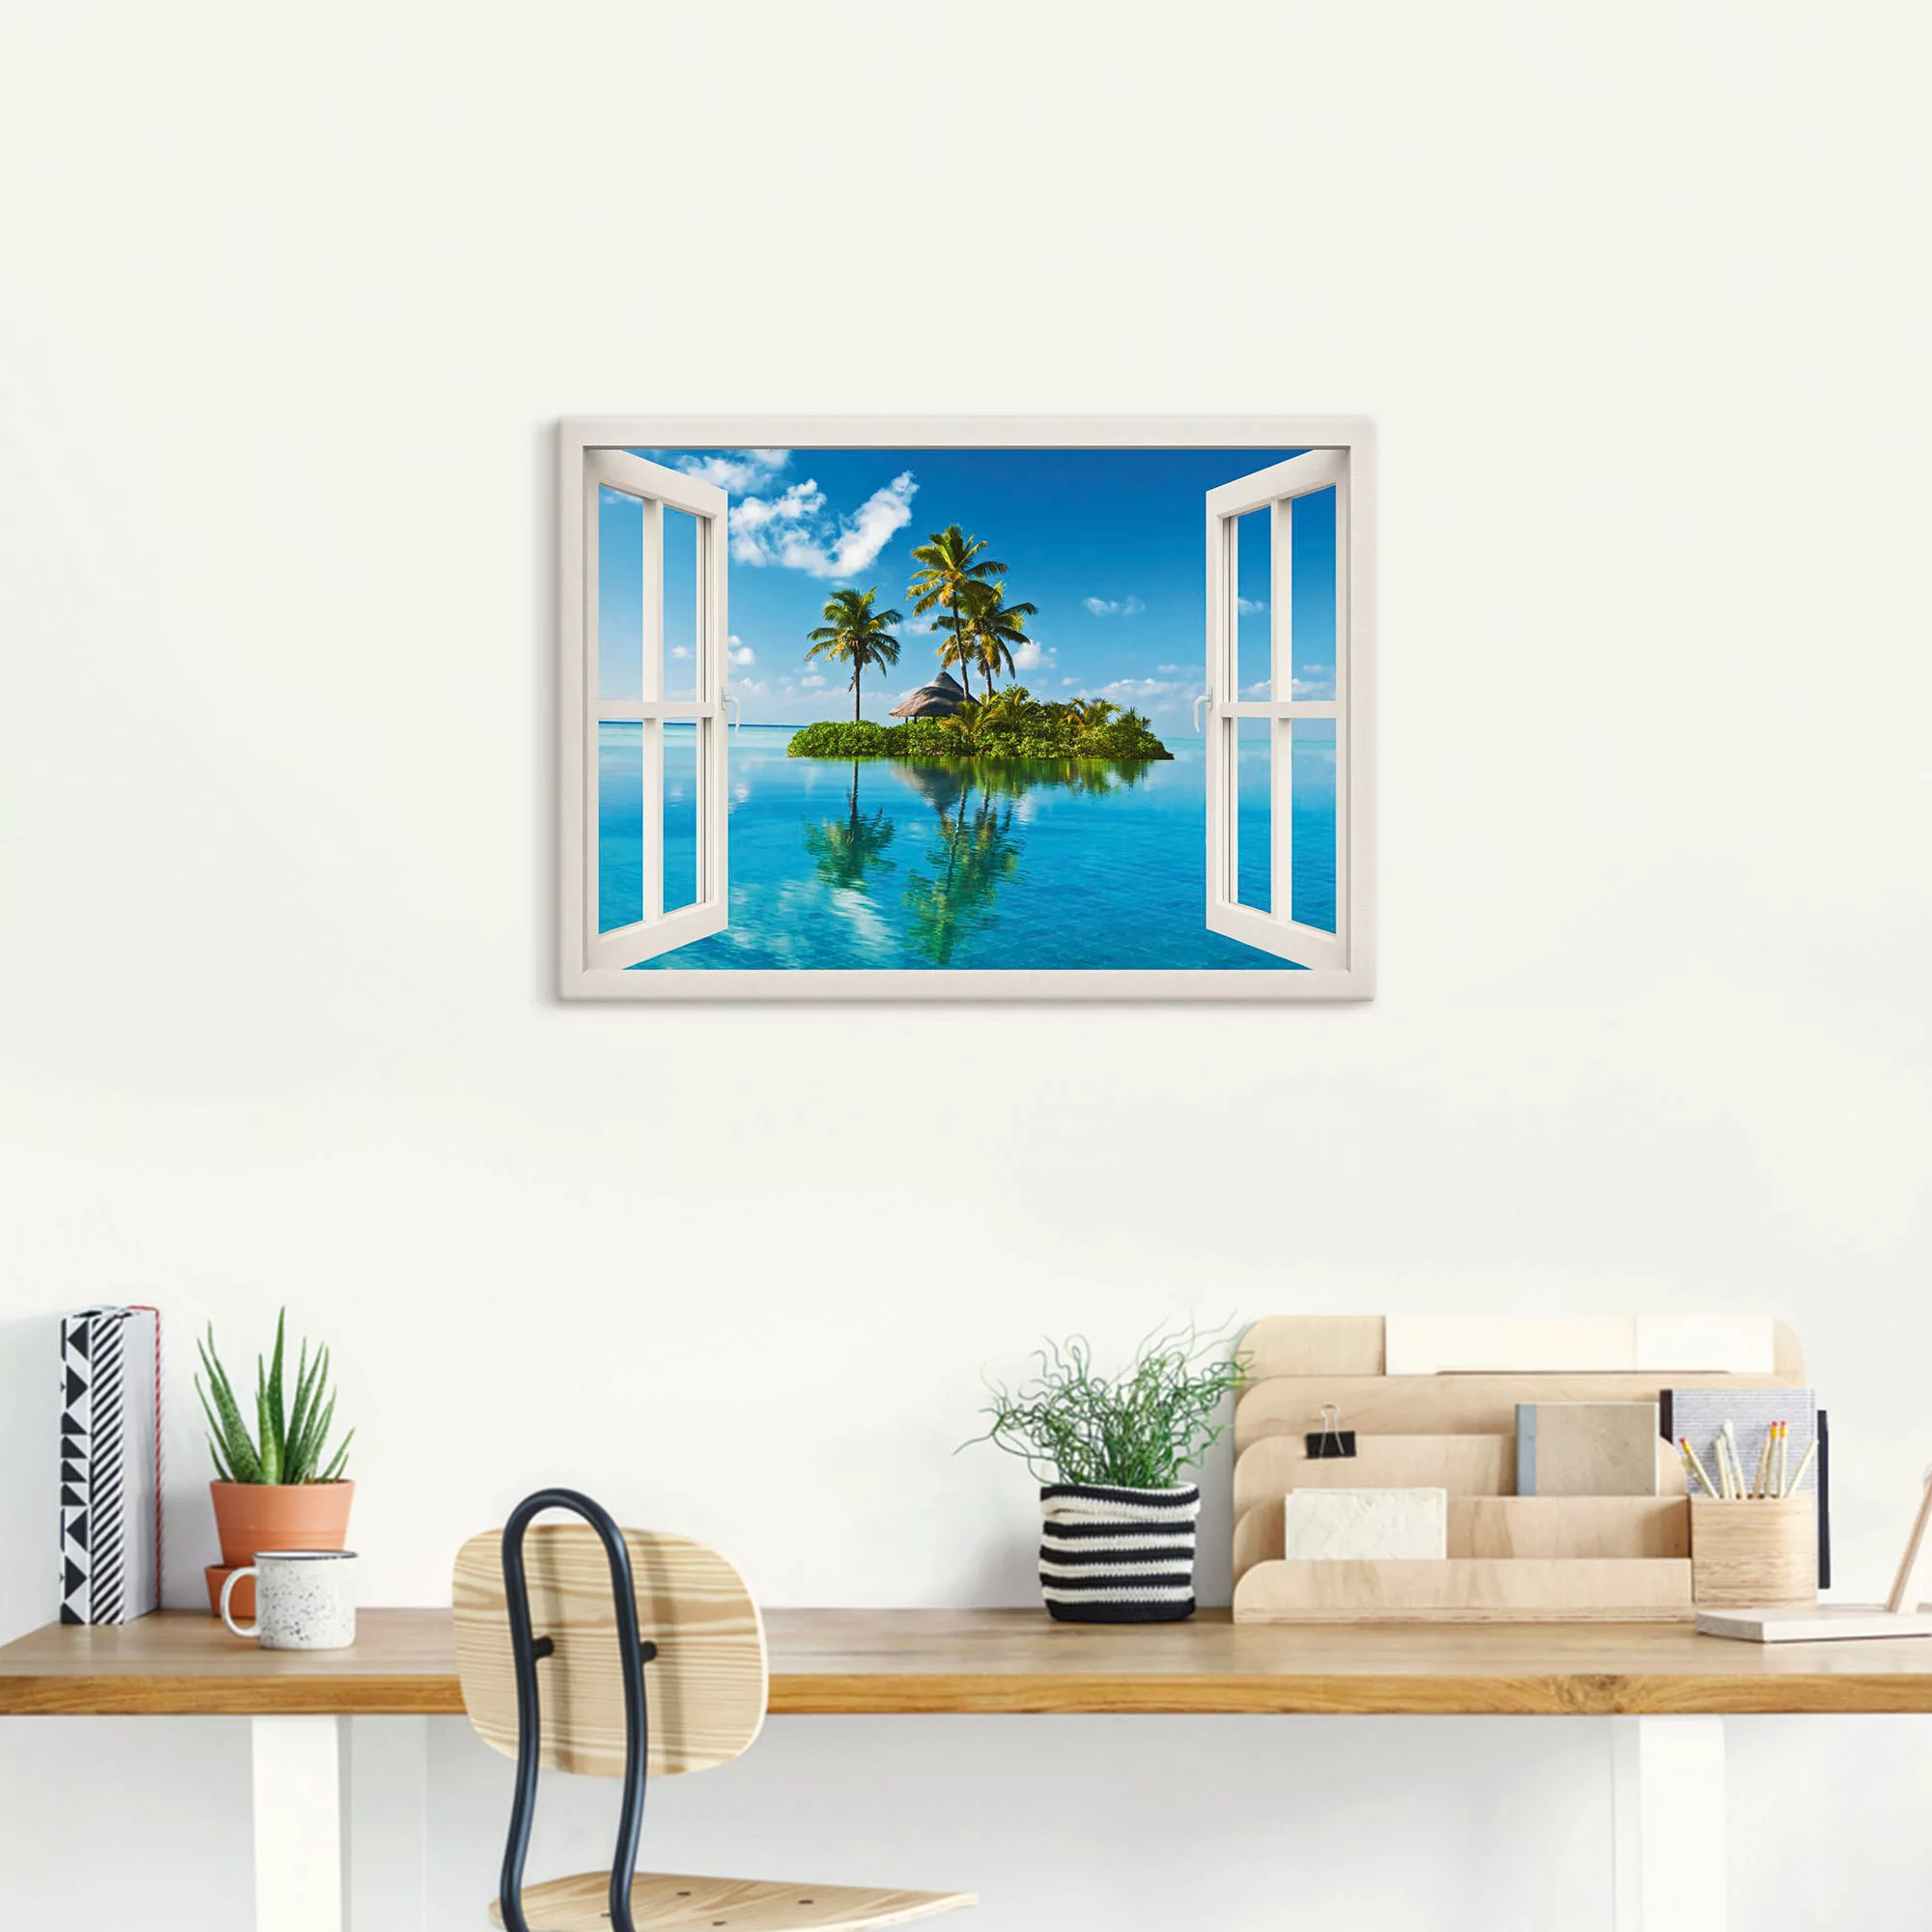 Artland Wandbild »Fensterblick Insel Palmen Meer«, Fensterblick, (1 St.), a günstig online kaufen